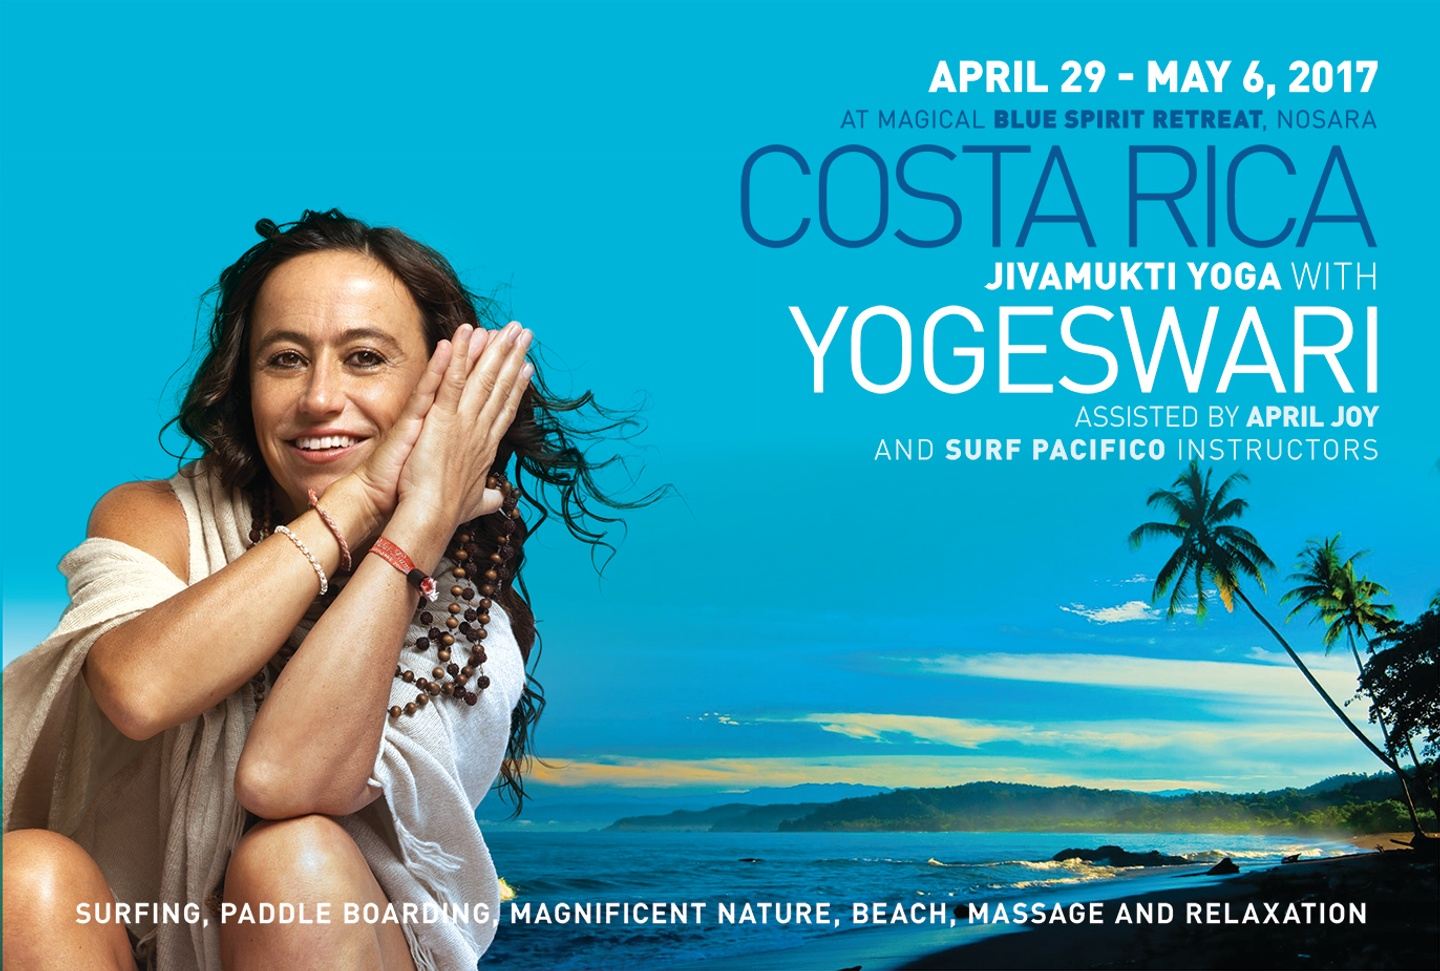 Jivamukti Yoga & Surf Retreat with Yogeswari, assisted by April Joy, and Surf Pacifico Instructors at Blue Spirit Retreat, Costa Rica 